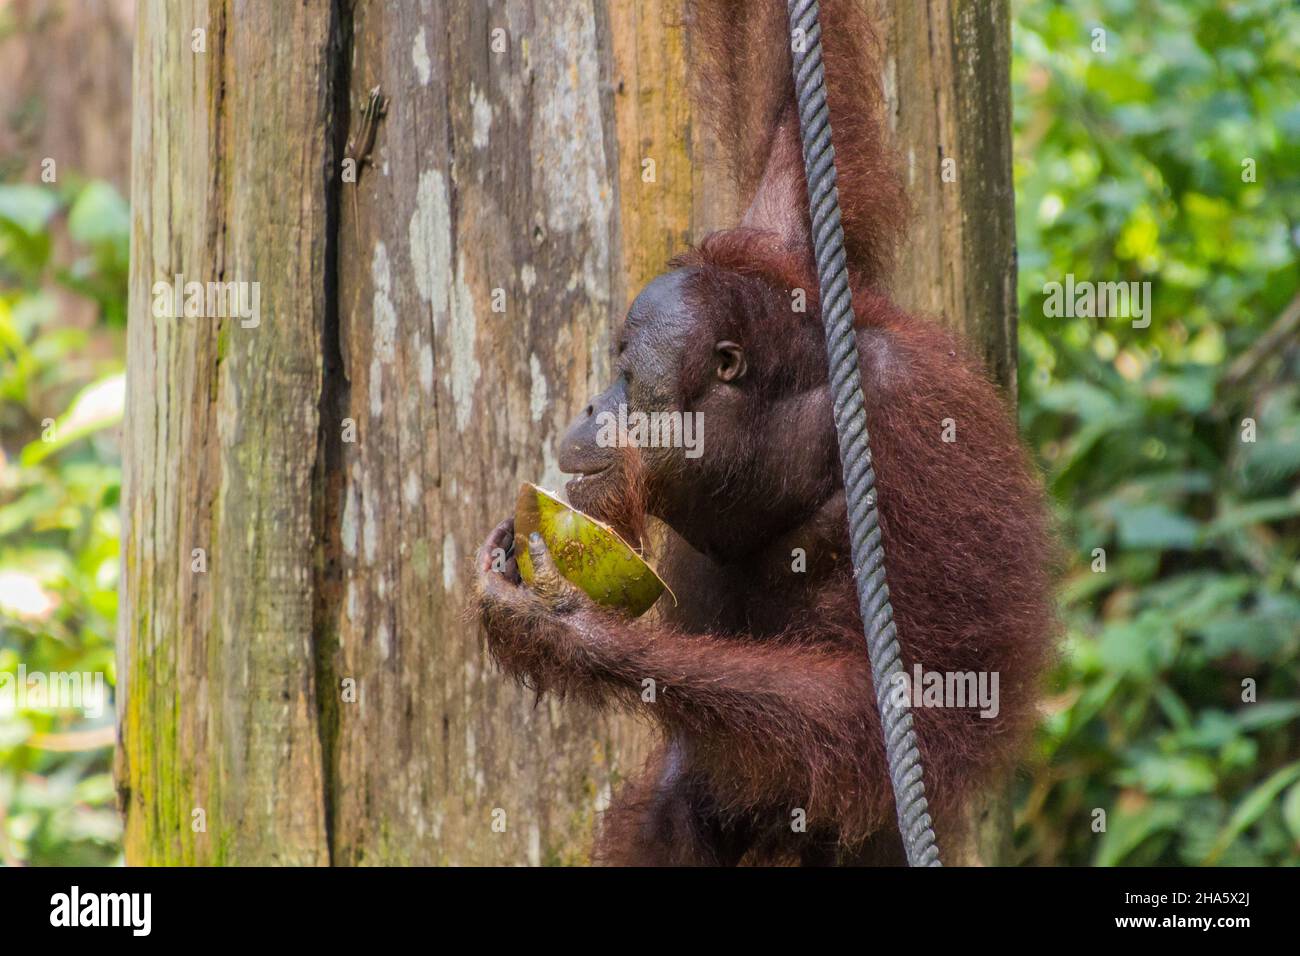 Bornean orangutan Pongo pygmaeus eating coconut in Sepilok Orangutan Rehabilitation Centre, Borneo island, Malaysia Stock Photo